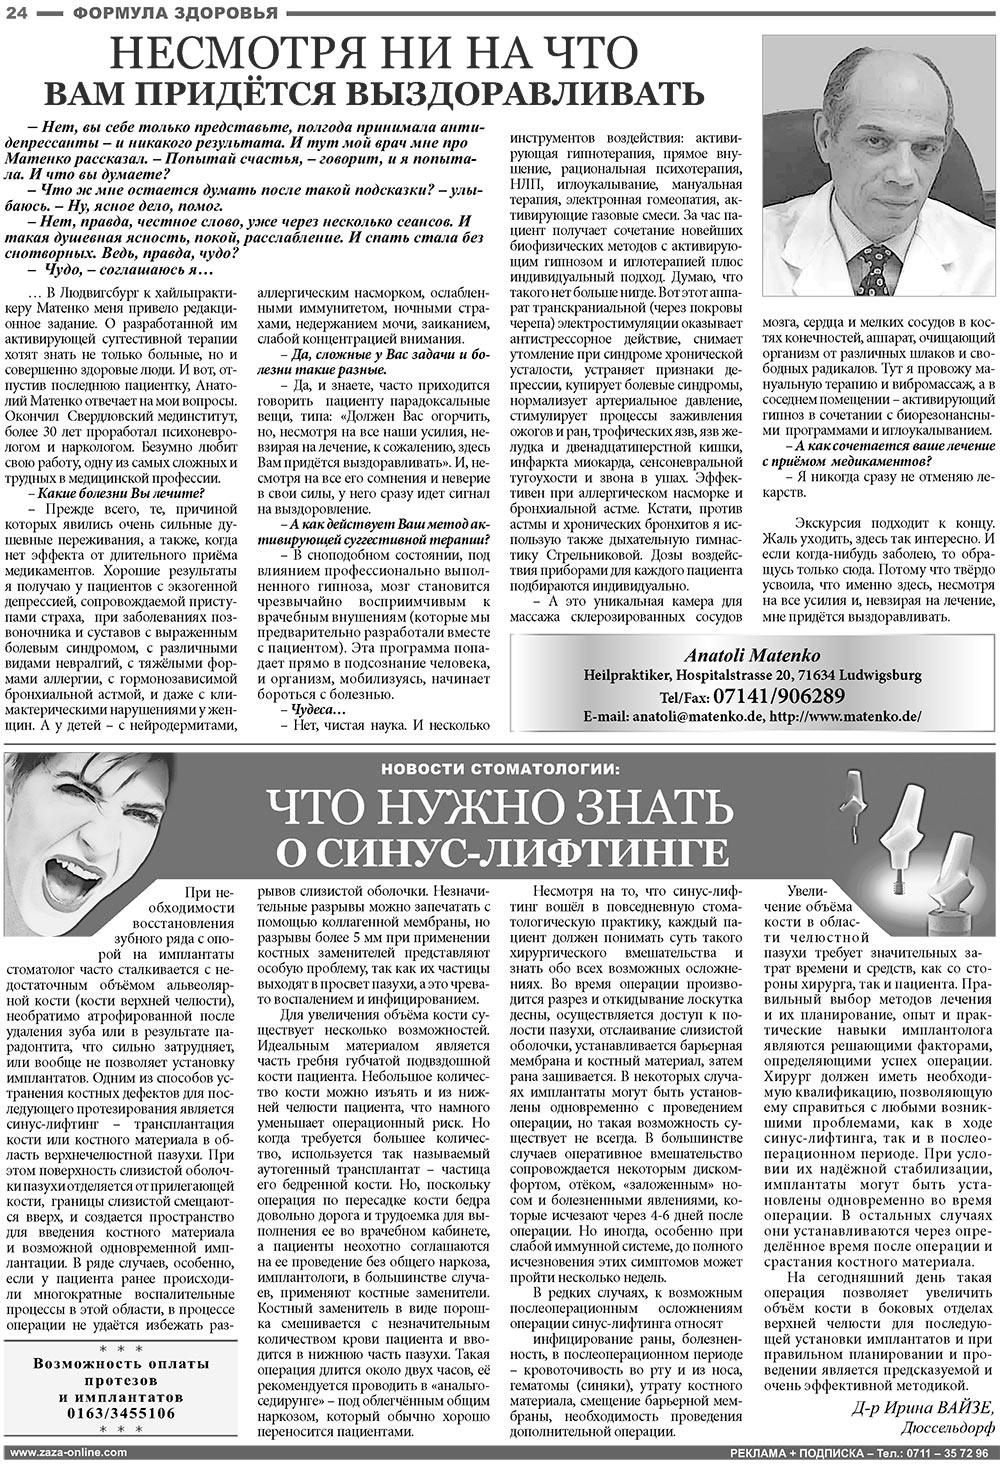 Известия BW (газета). 2008 год, номер 11, стр. 24